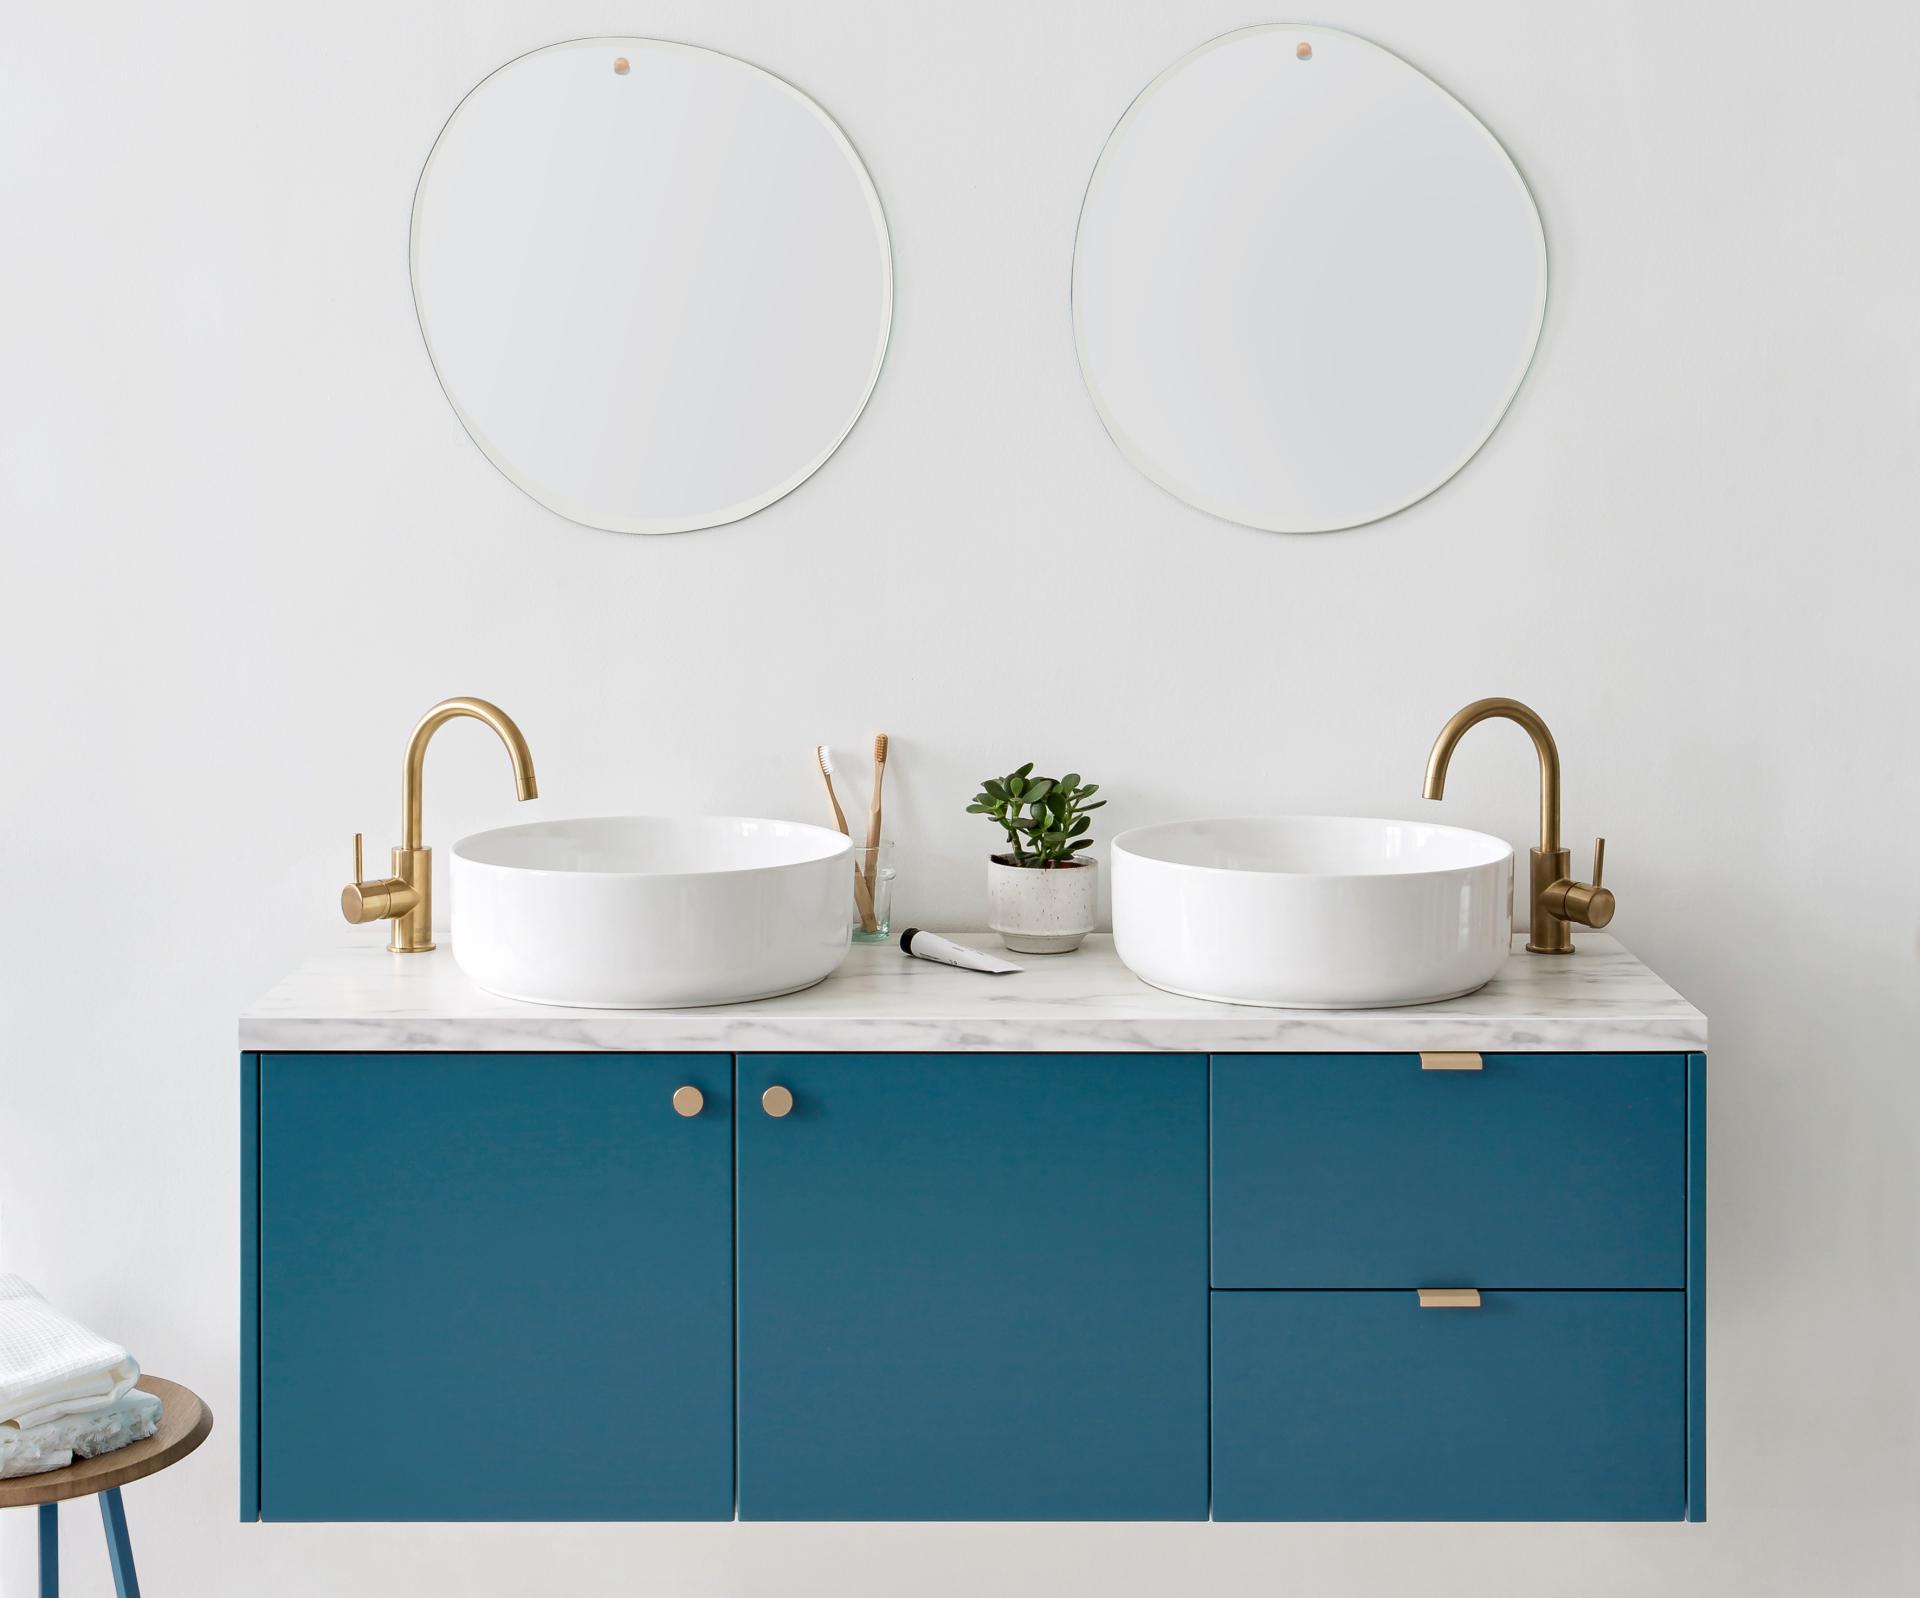 A Blue lagon bathroom furniture